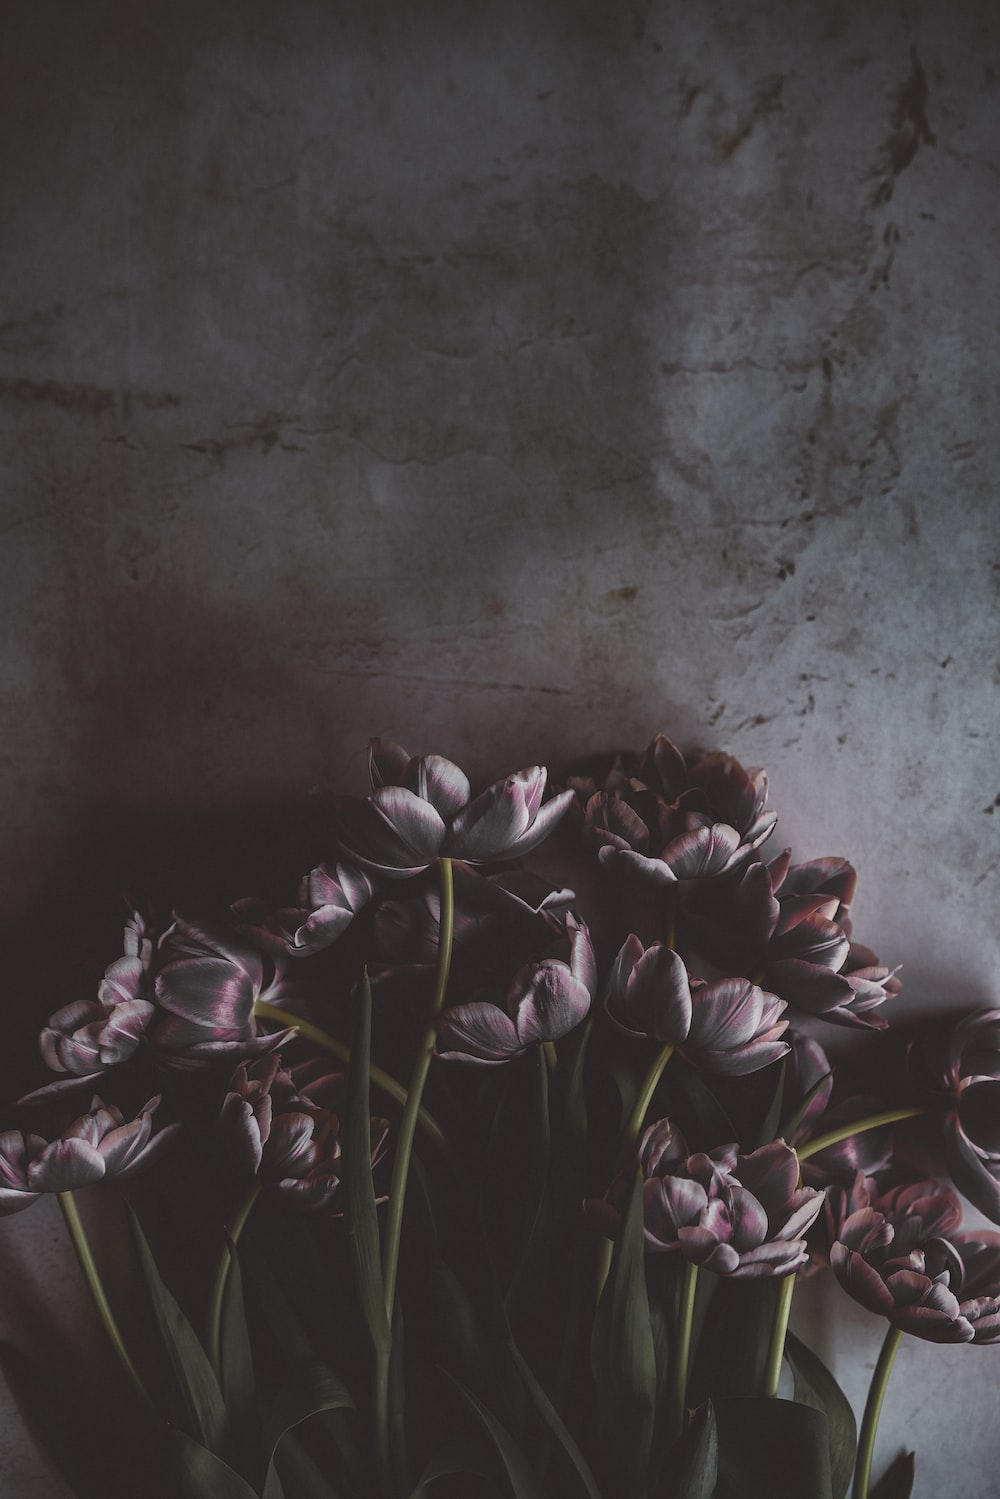 Dark Flower Picture. Download Free Image